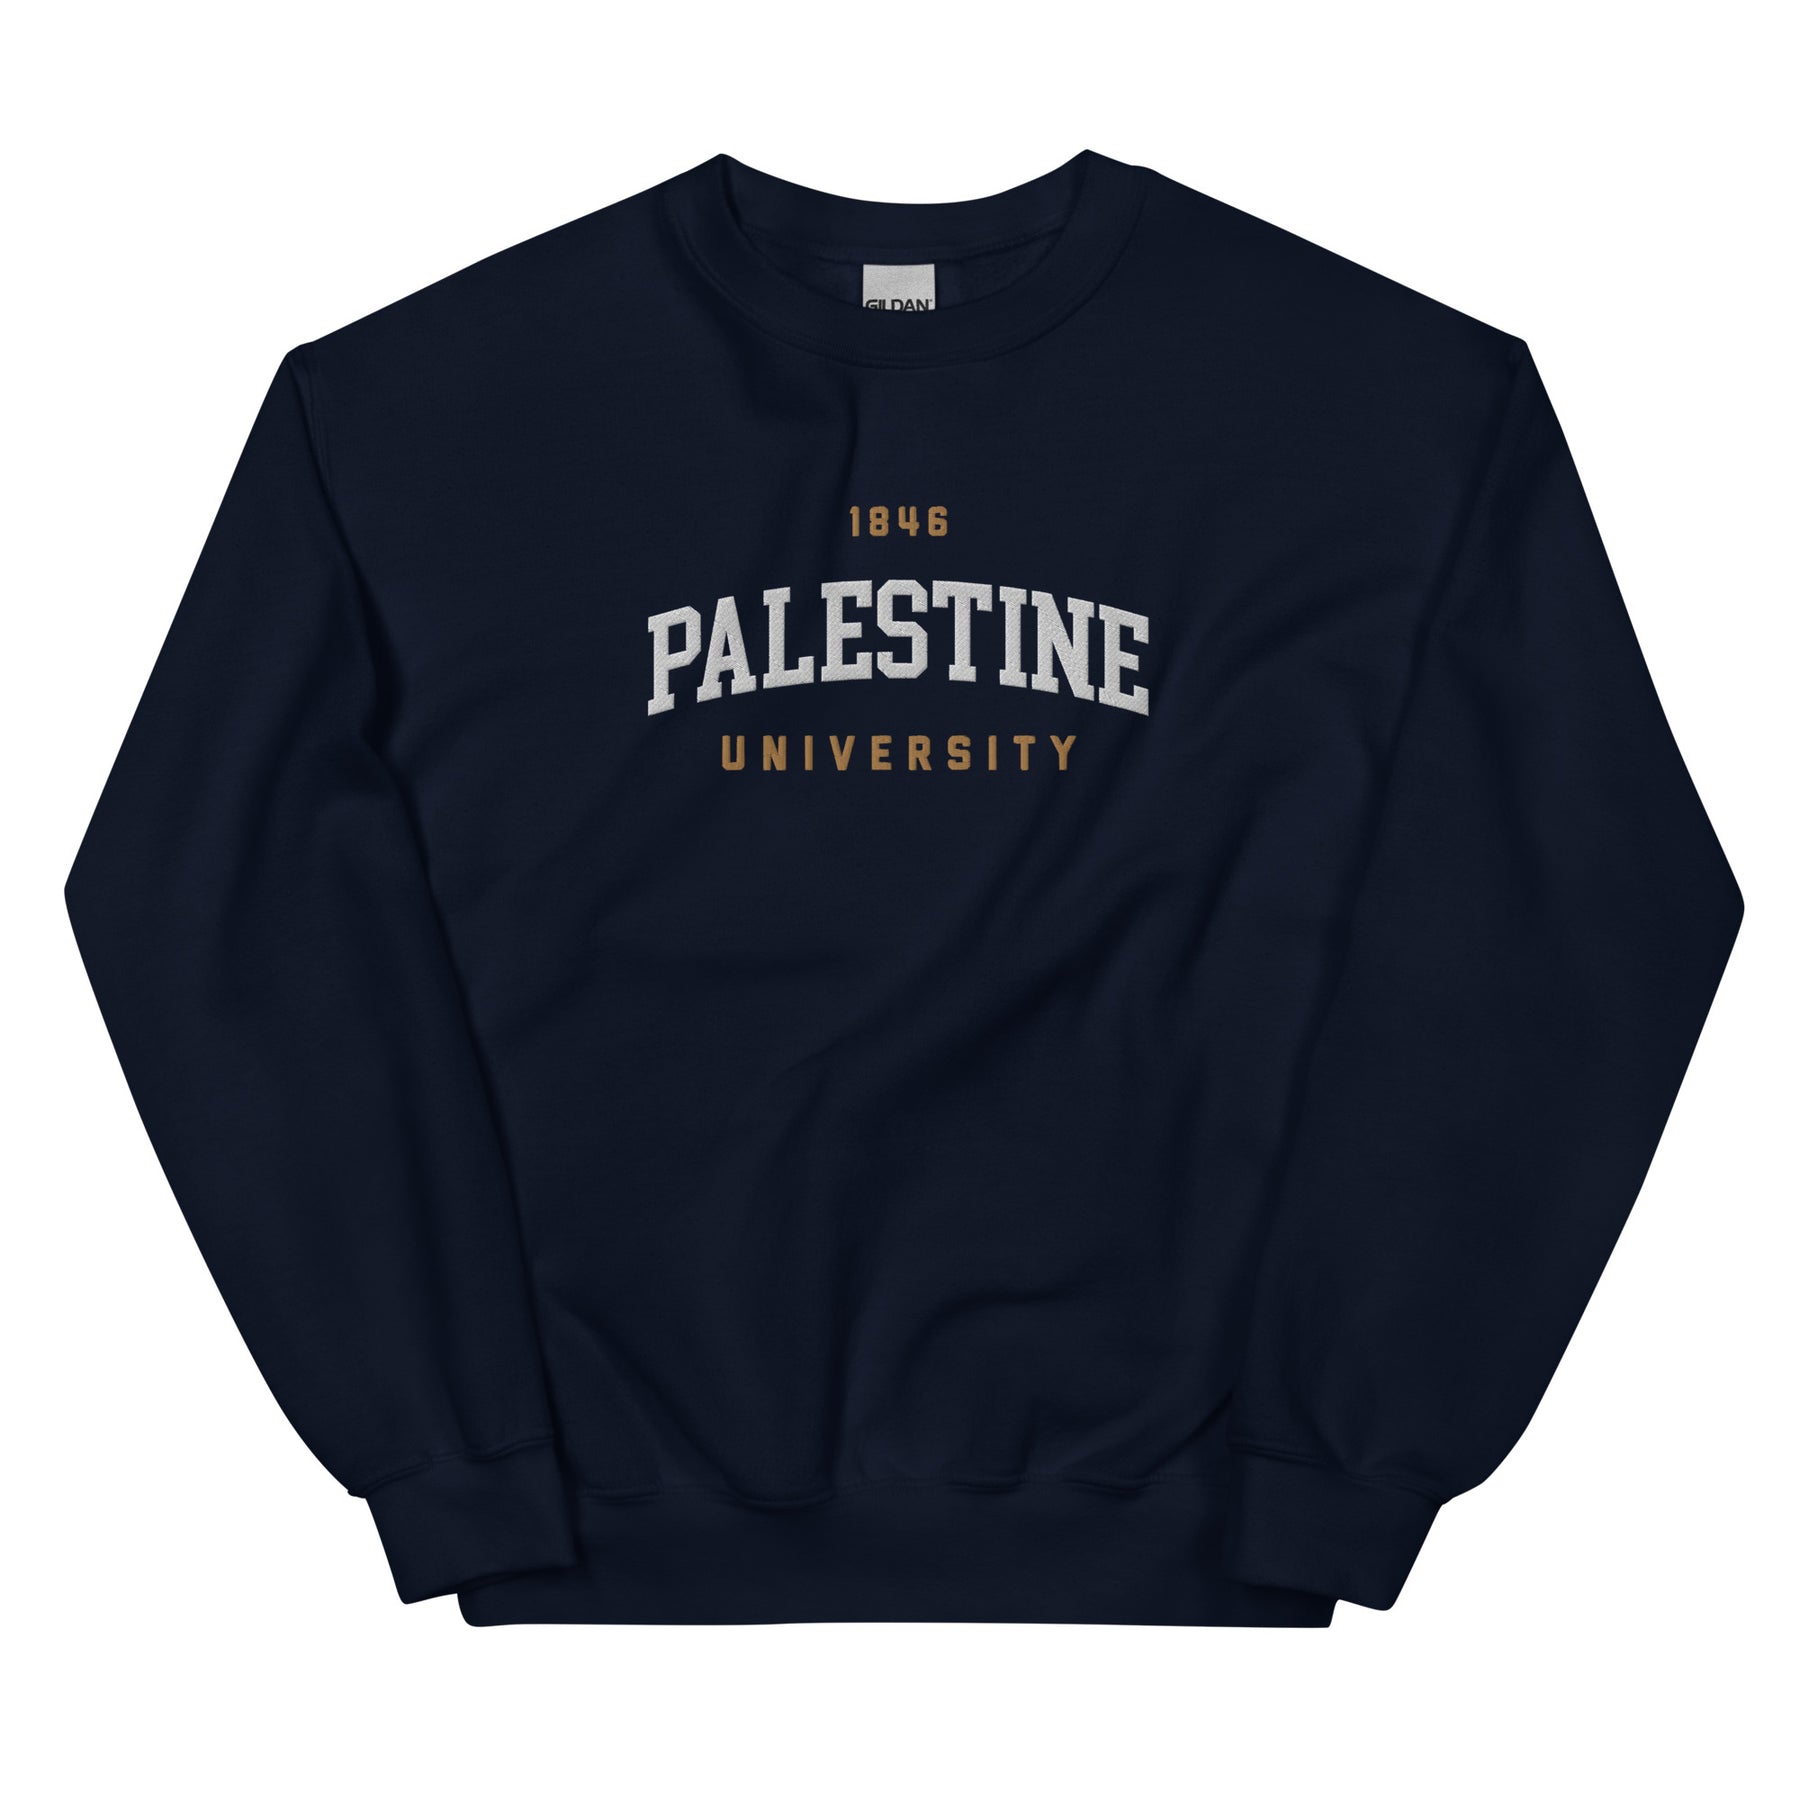 Palestine University 1846 sweatshirt in navy by Dar Collective